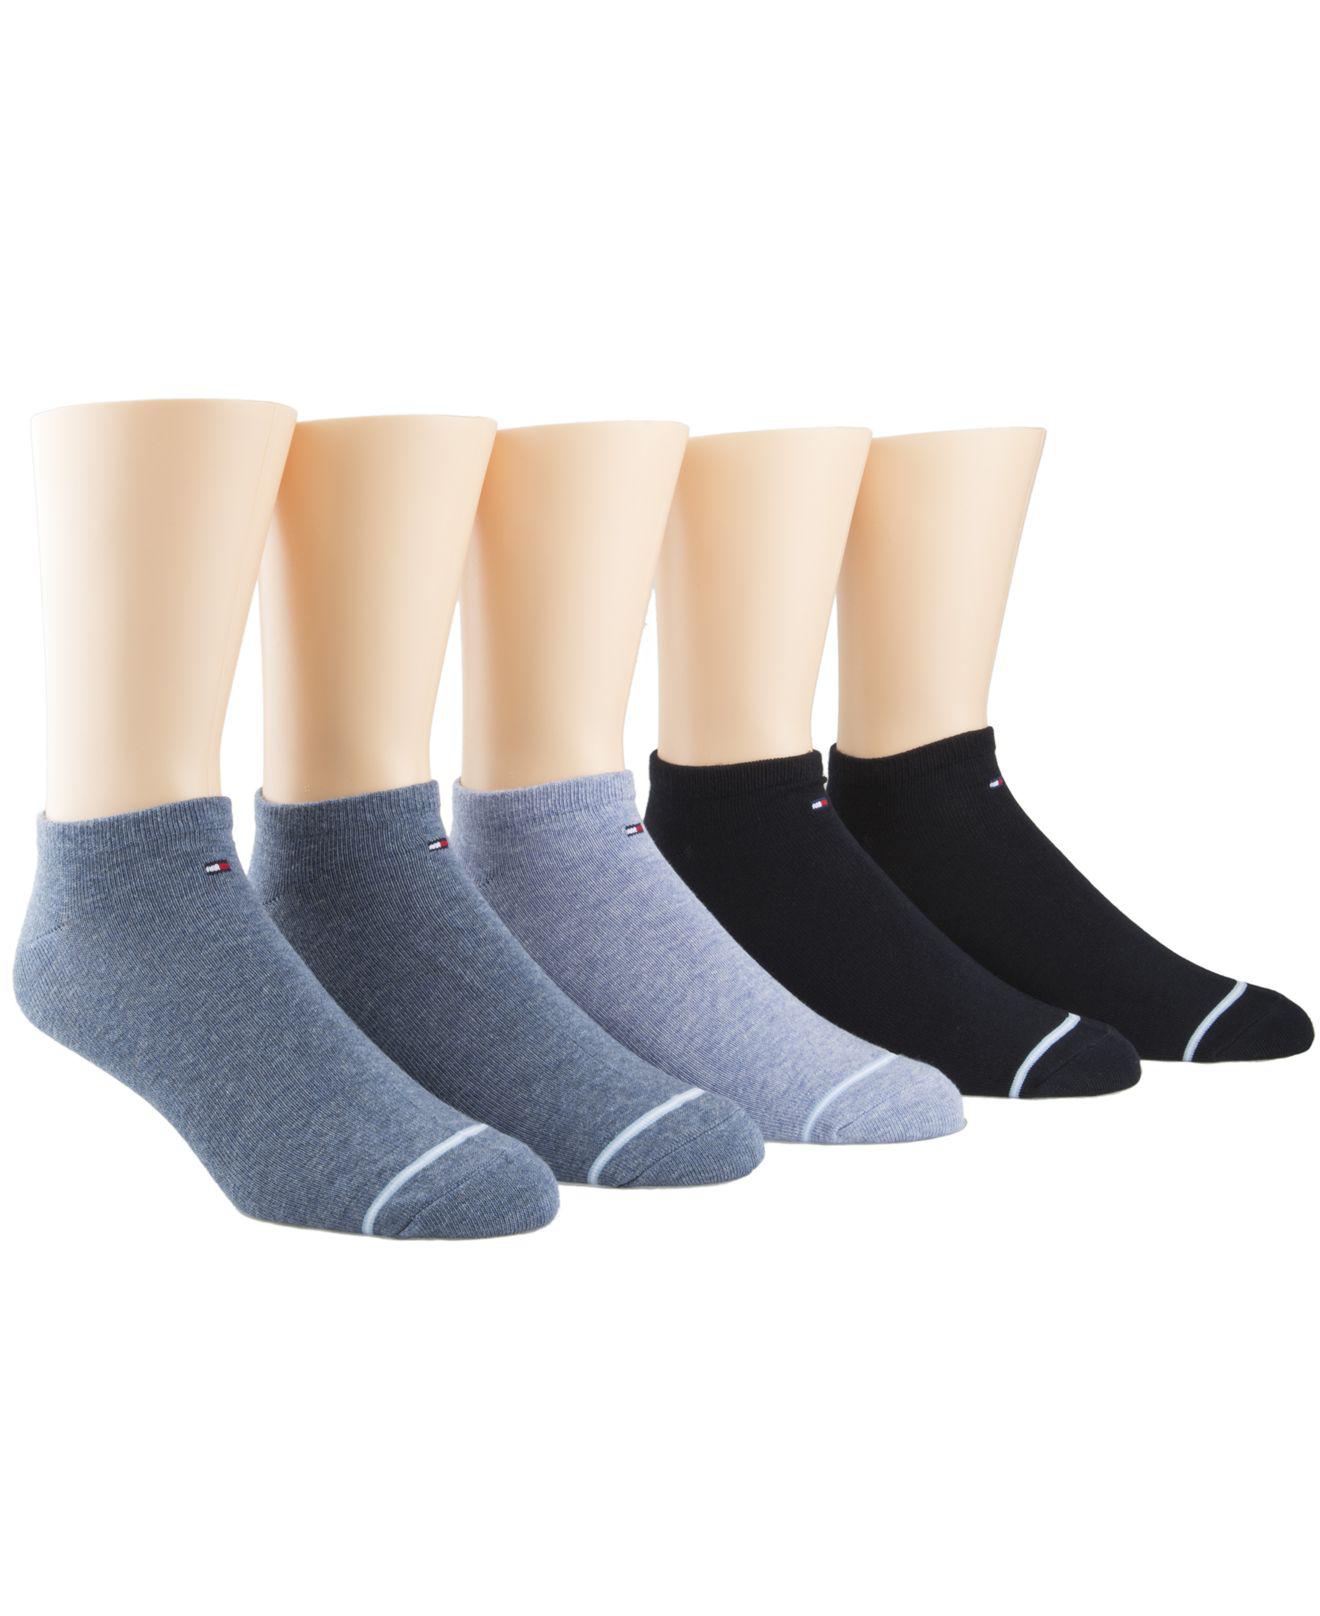 Tommy Hilfiger Cotton Ankle Socks, 5 Pack in Blue for Men - Save 32% - Lyst